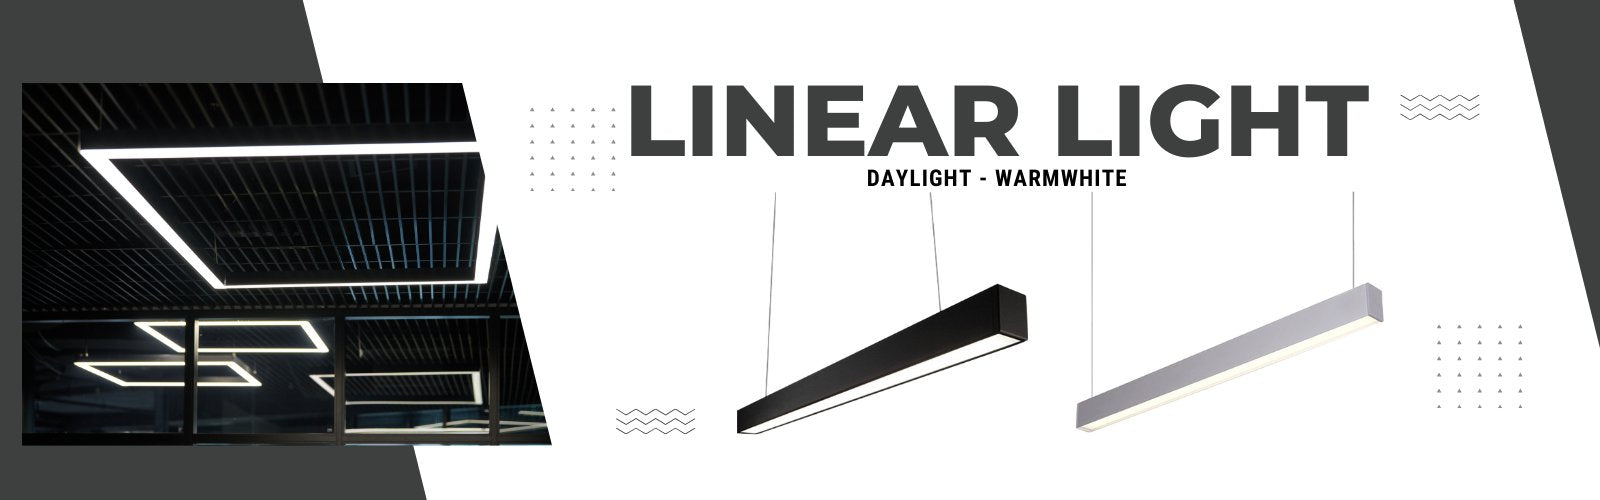 LED Linear light Ecoshift Shopify